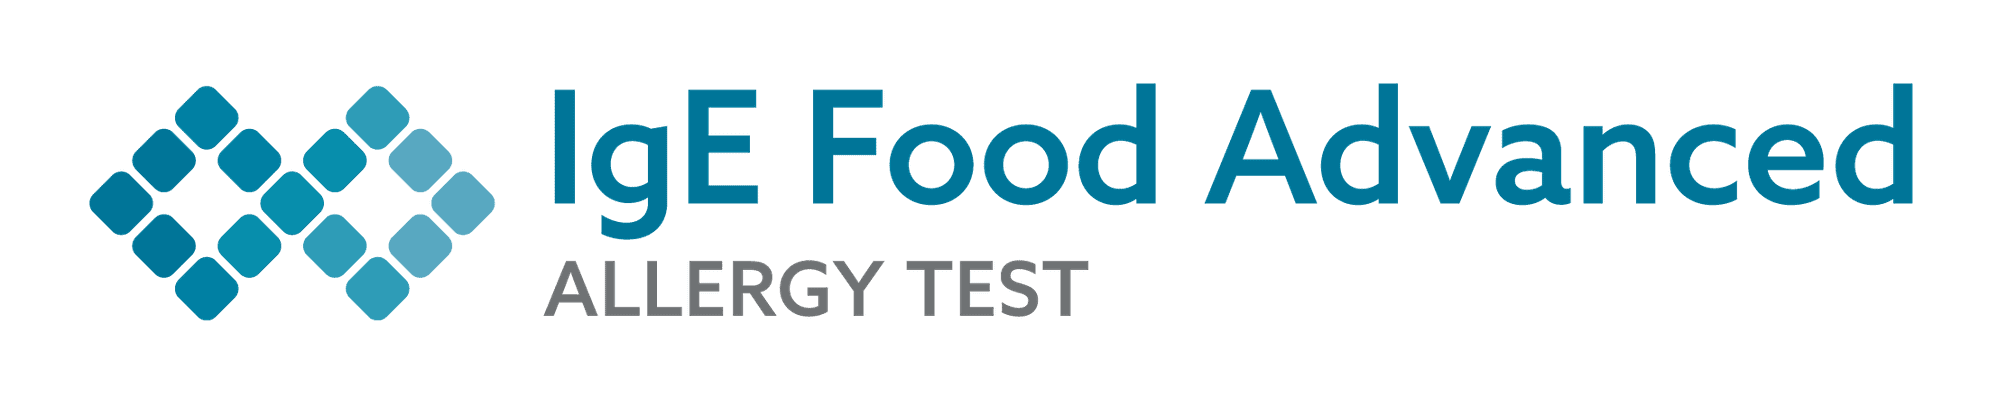 IgE Food Allergy Basic Test